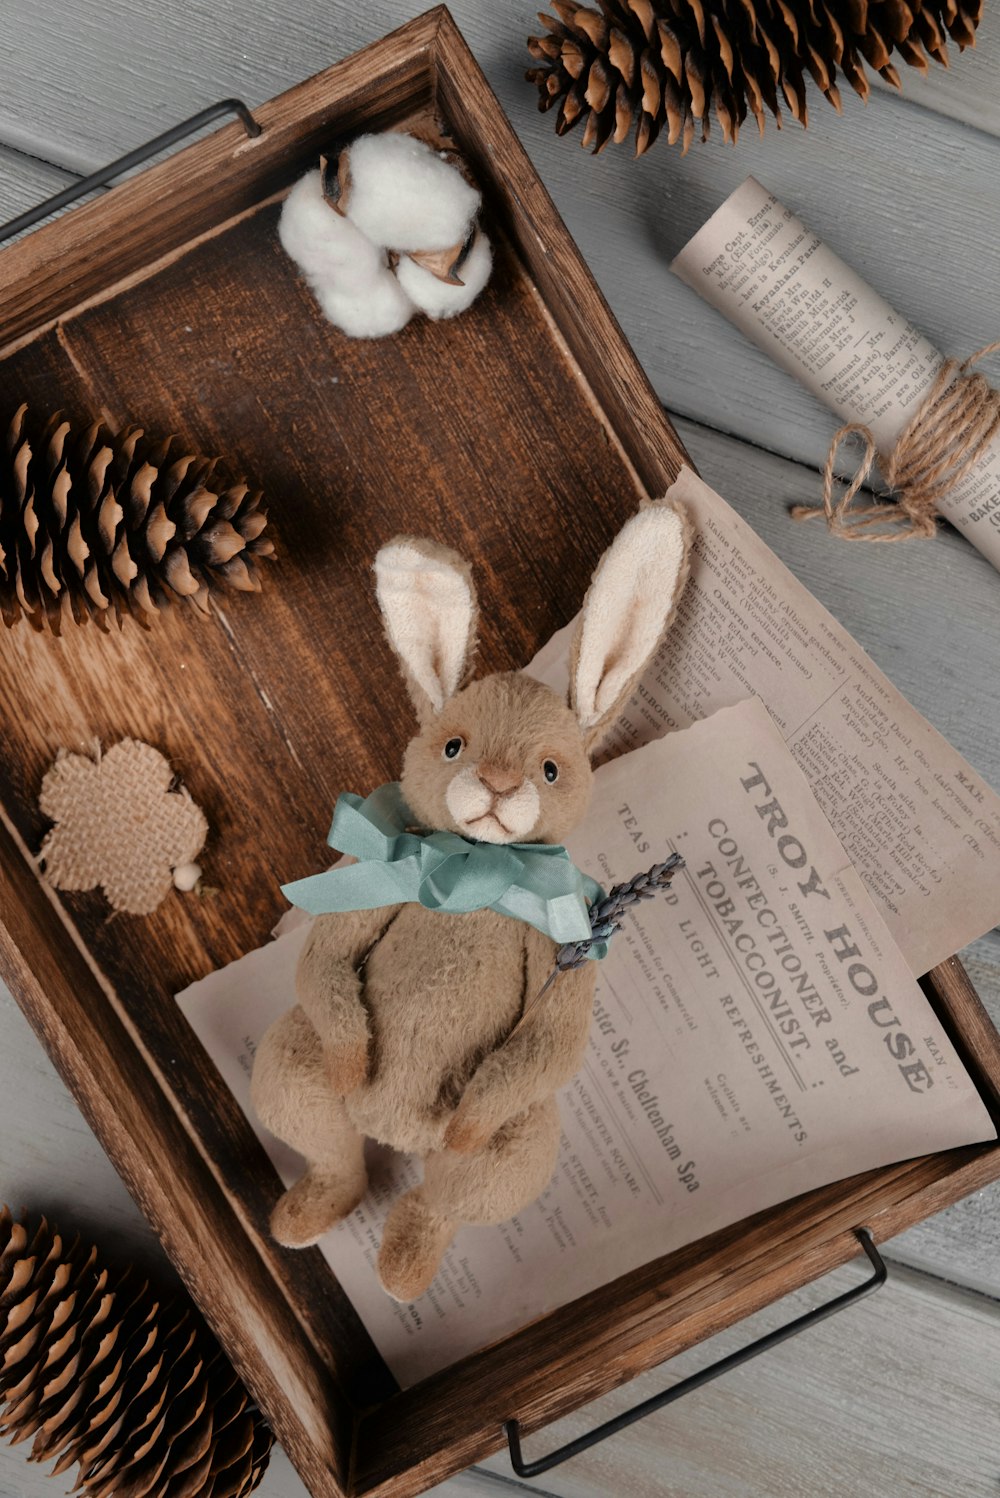 a stuffed rabbit sitting on top of an open book